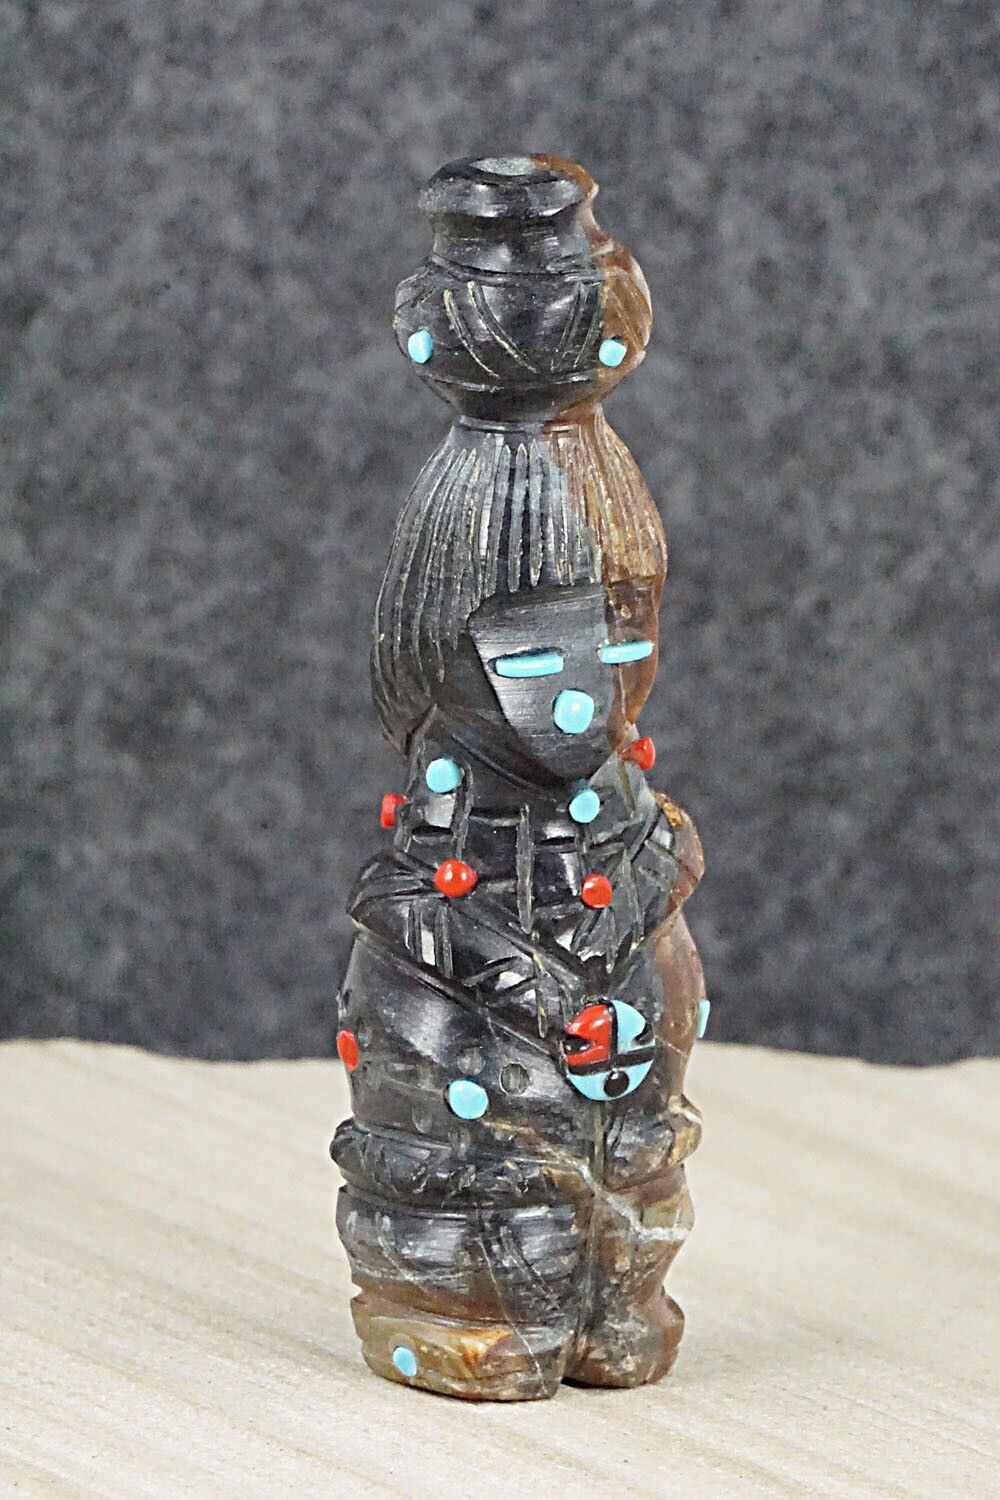 Ola Maiden Zuni Fetish Carving - Danette Laate